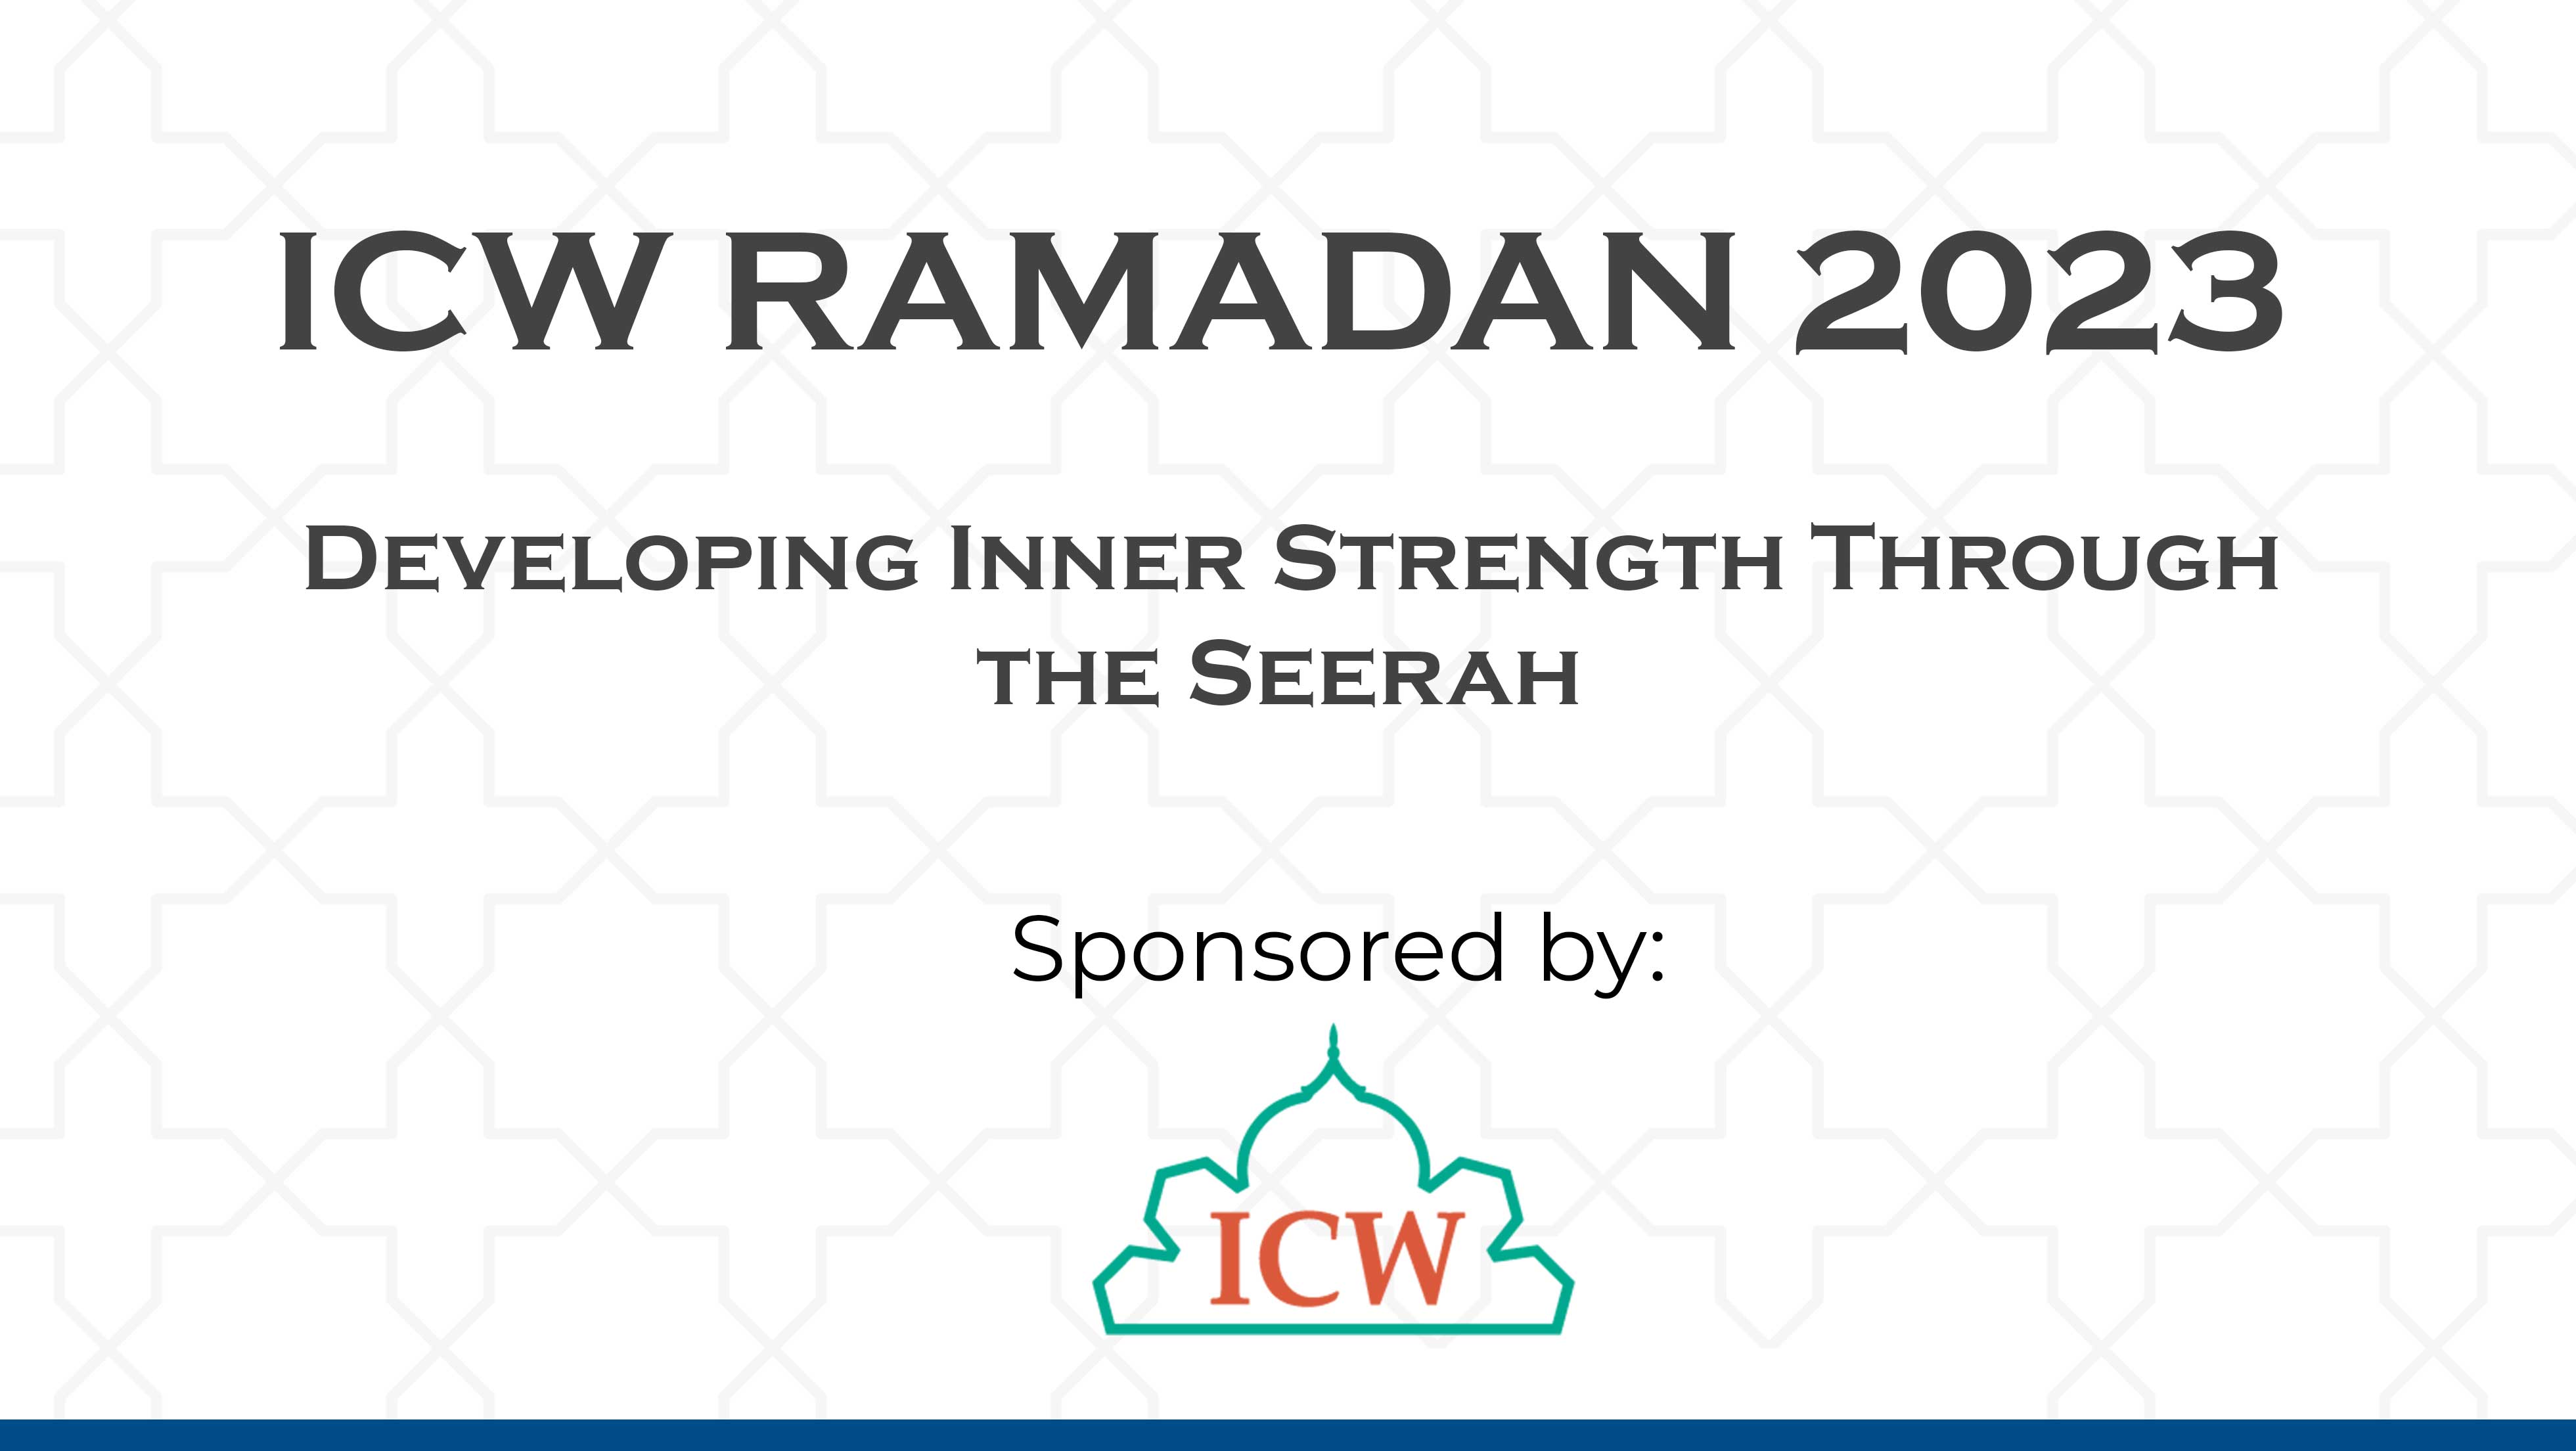 ICW - Ramadan 2023